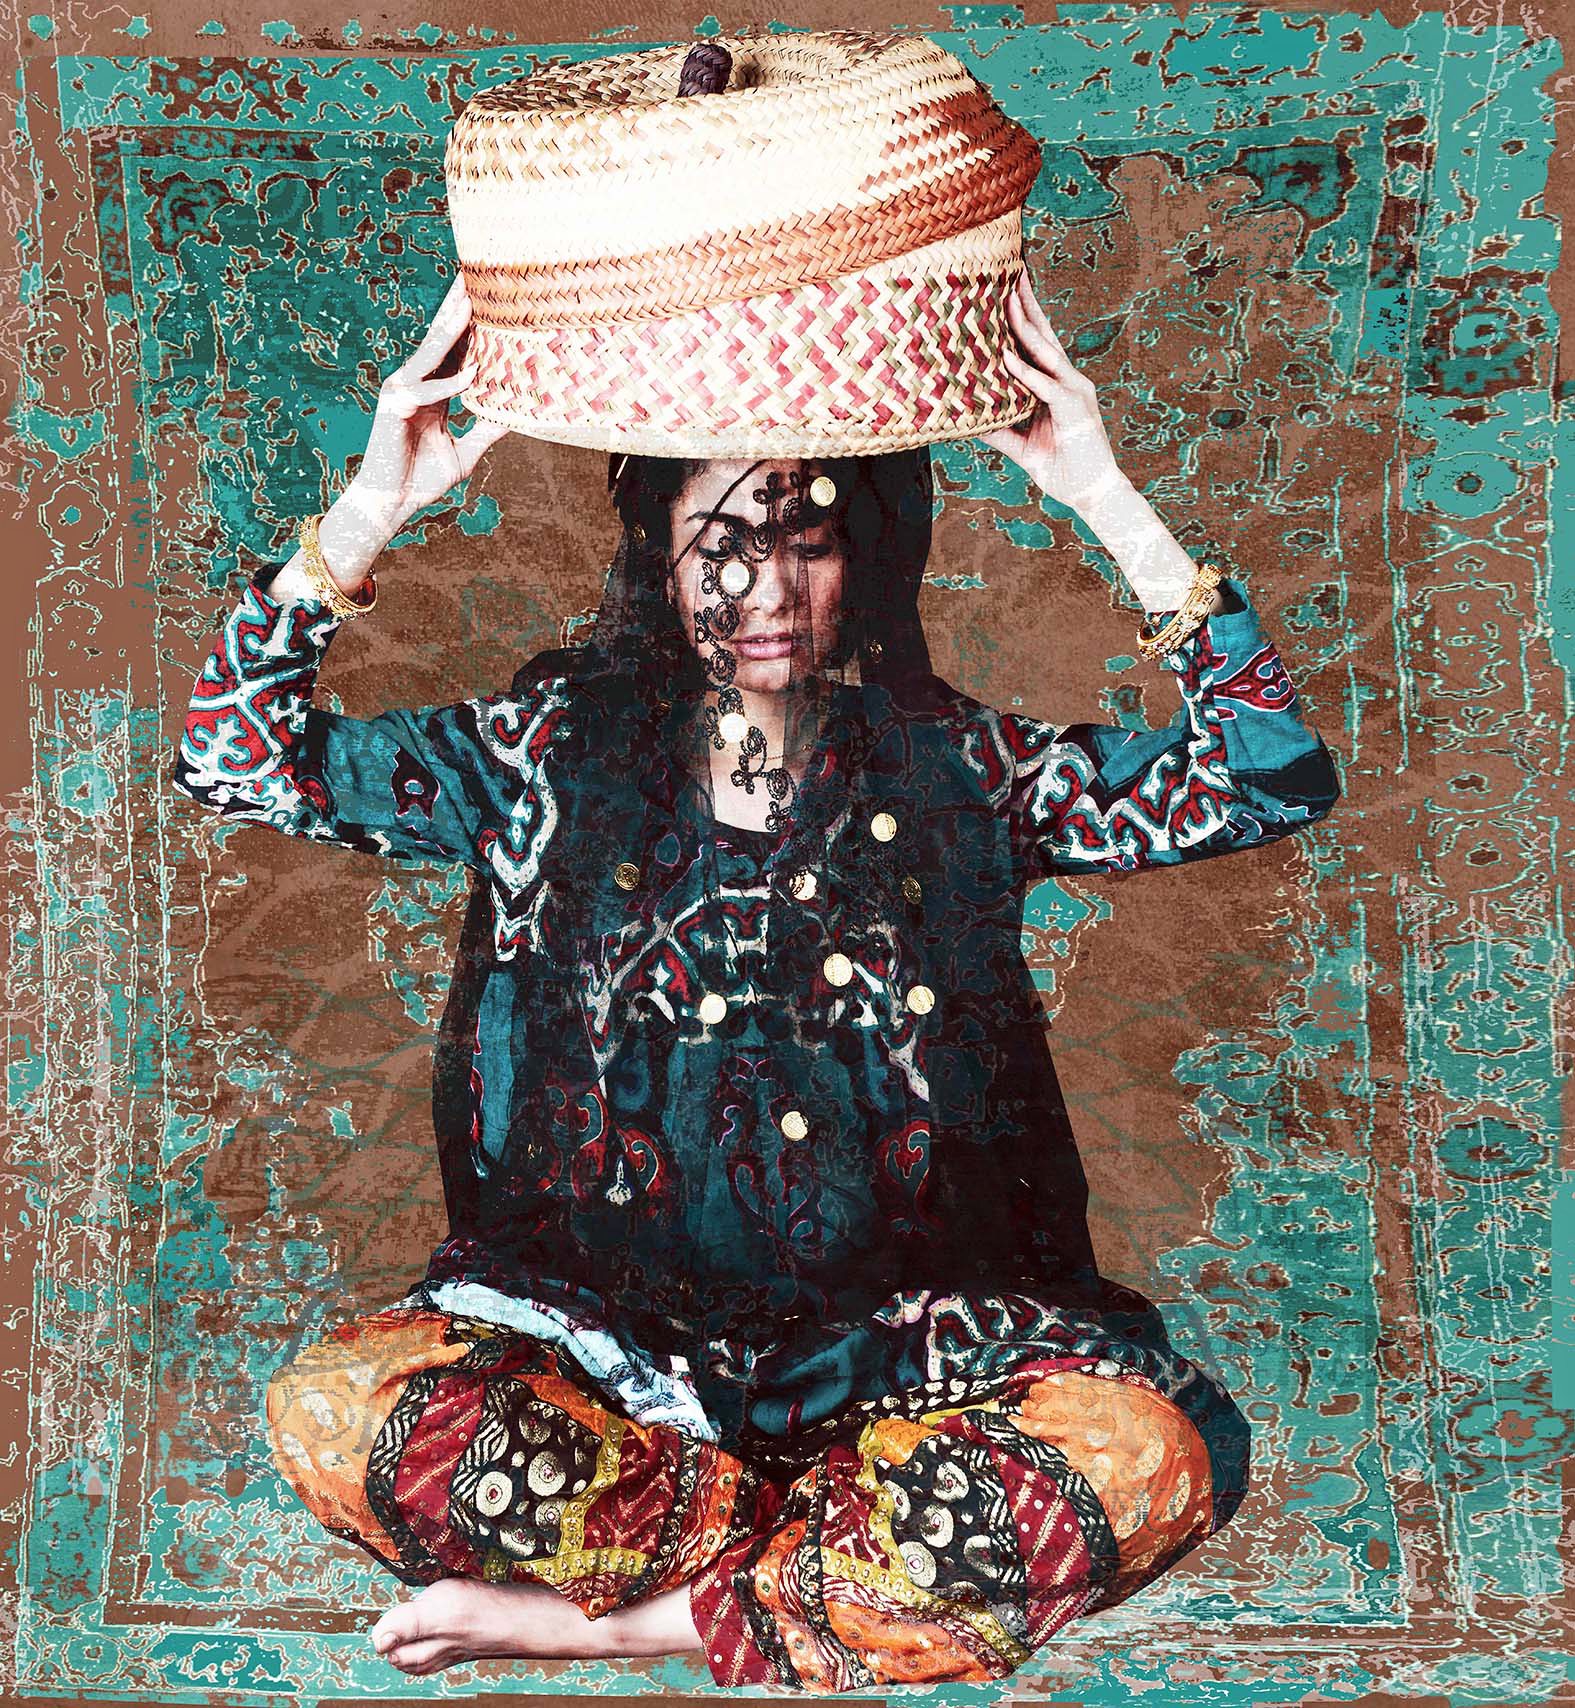 Saudi Mixed Media Artist Weaves Her Art With Carpet Threads